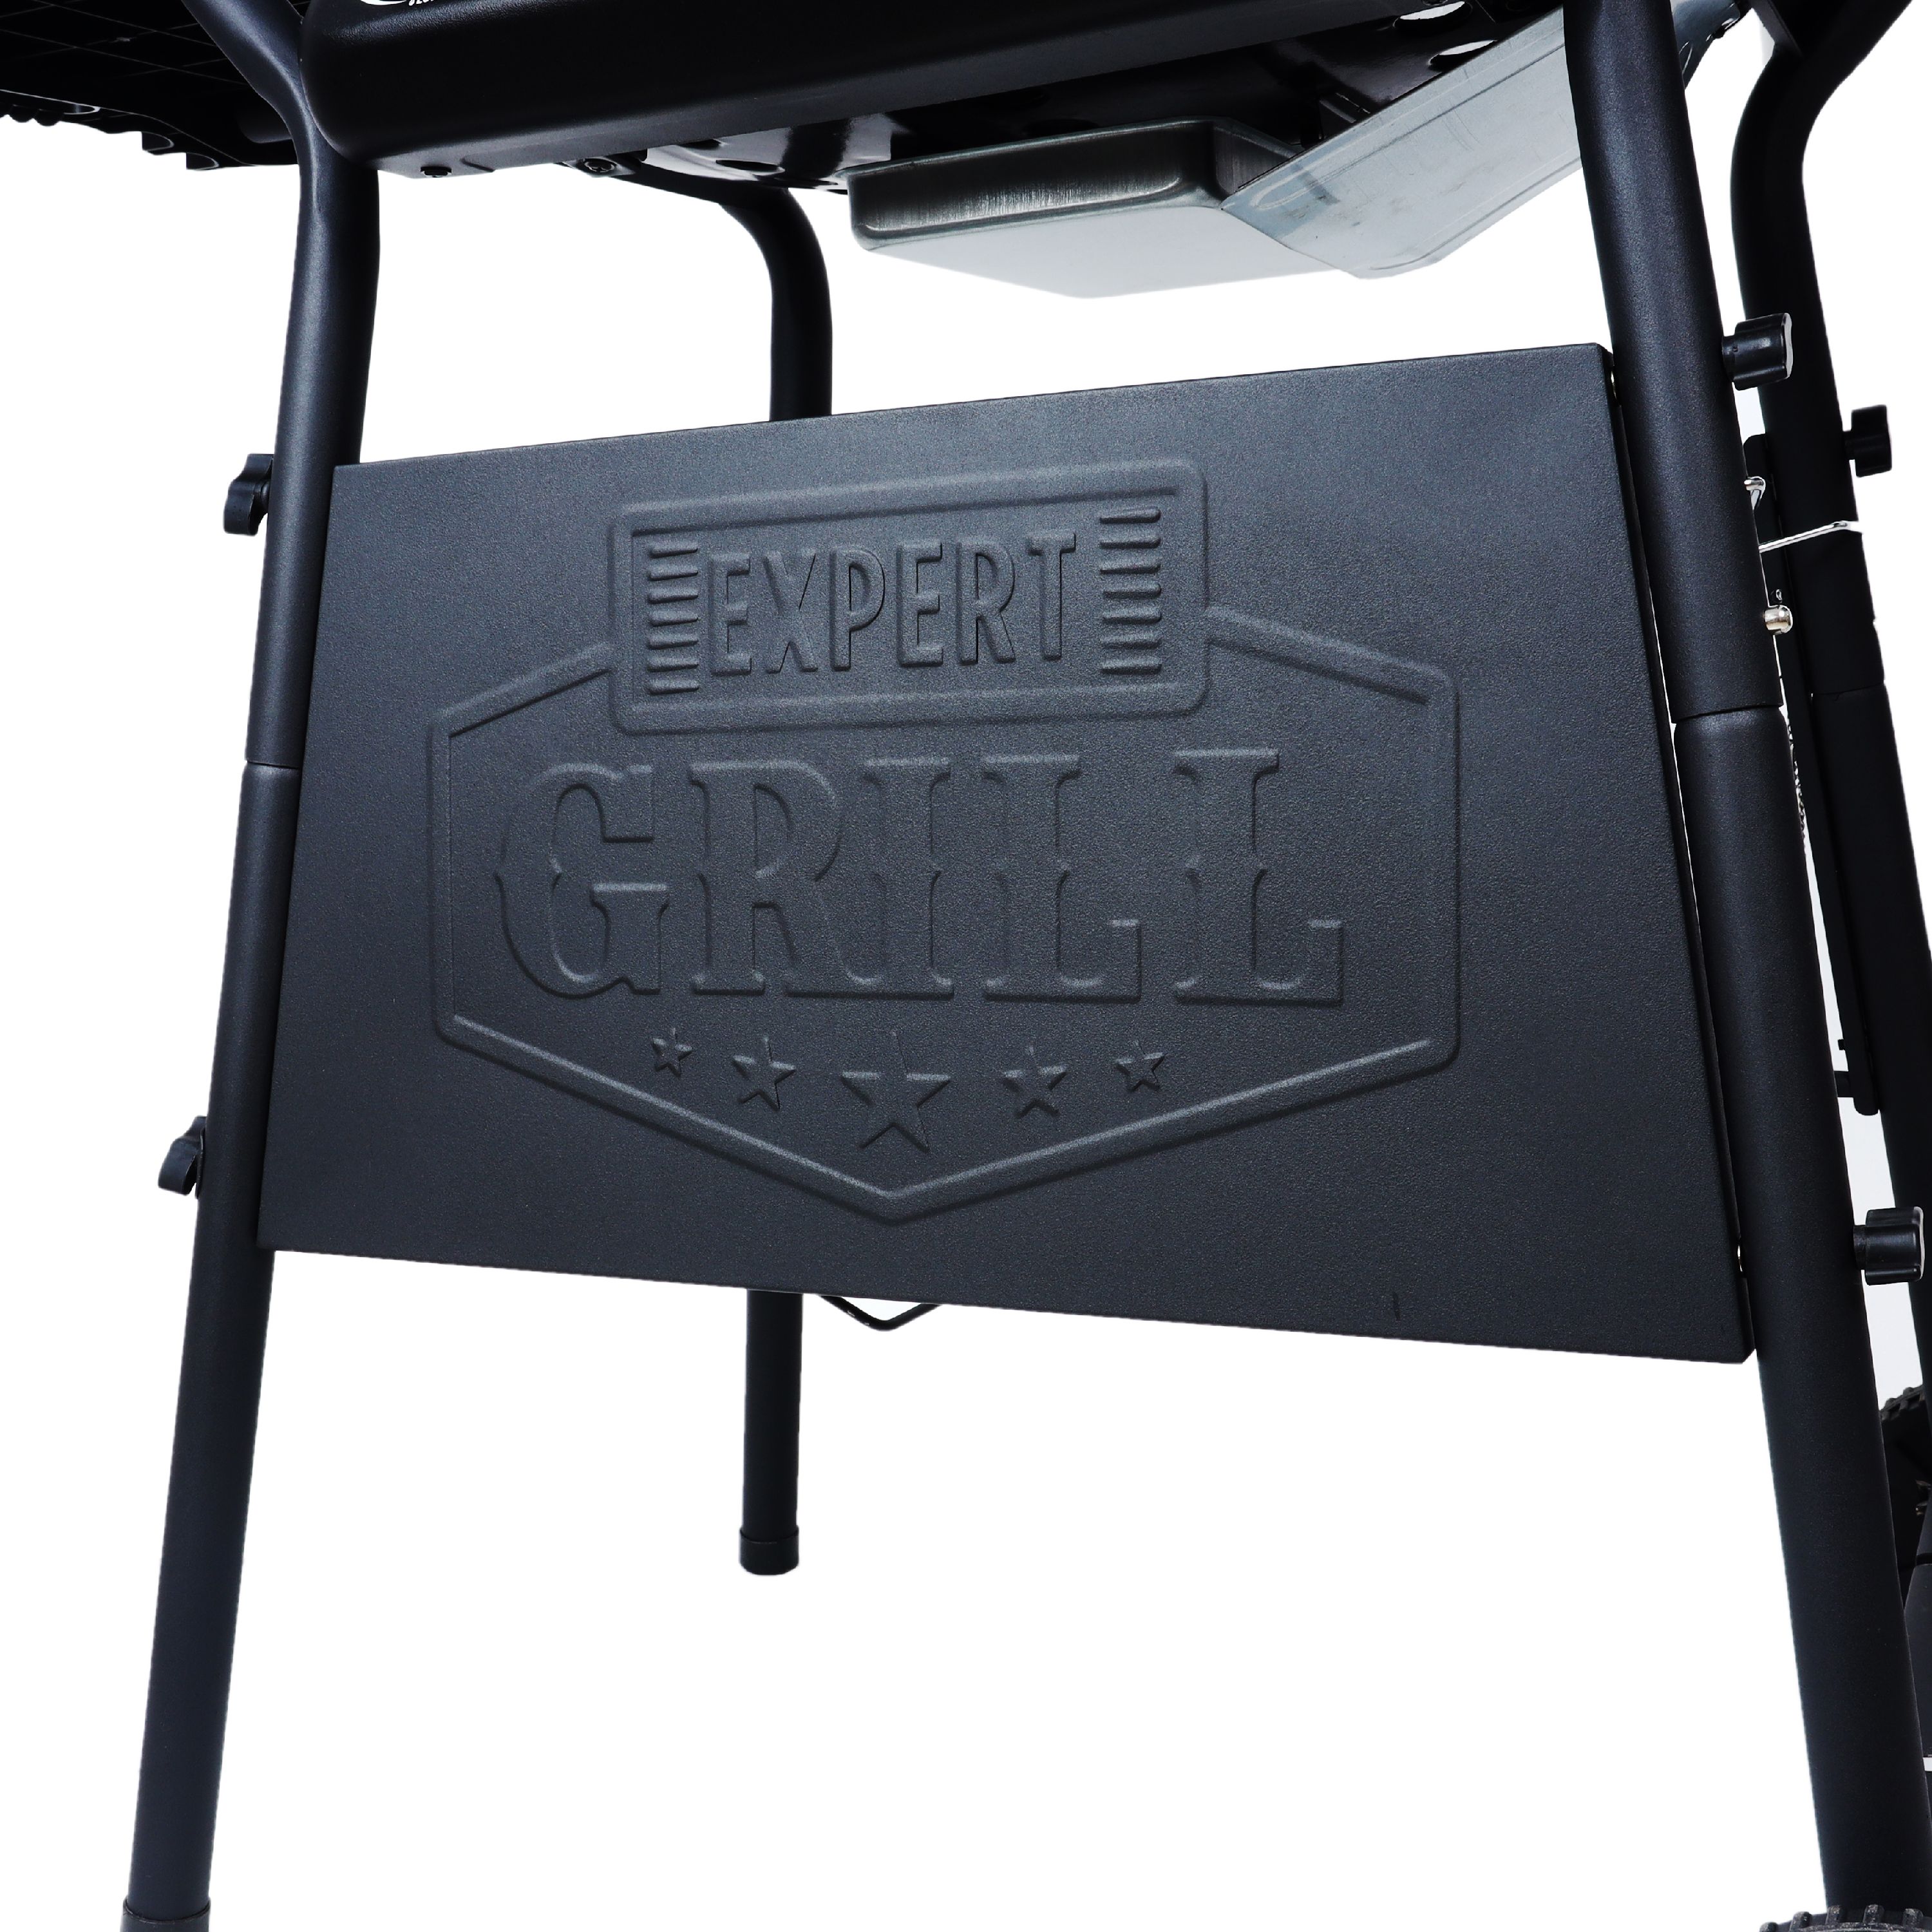 Expert Grill 3 Burner 27,000 BTU Propane Gas Grill, Black, XG10-101-002-02 - image 9 of 15